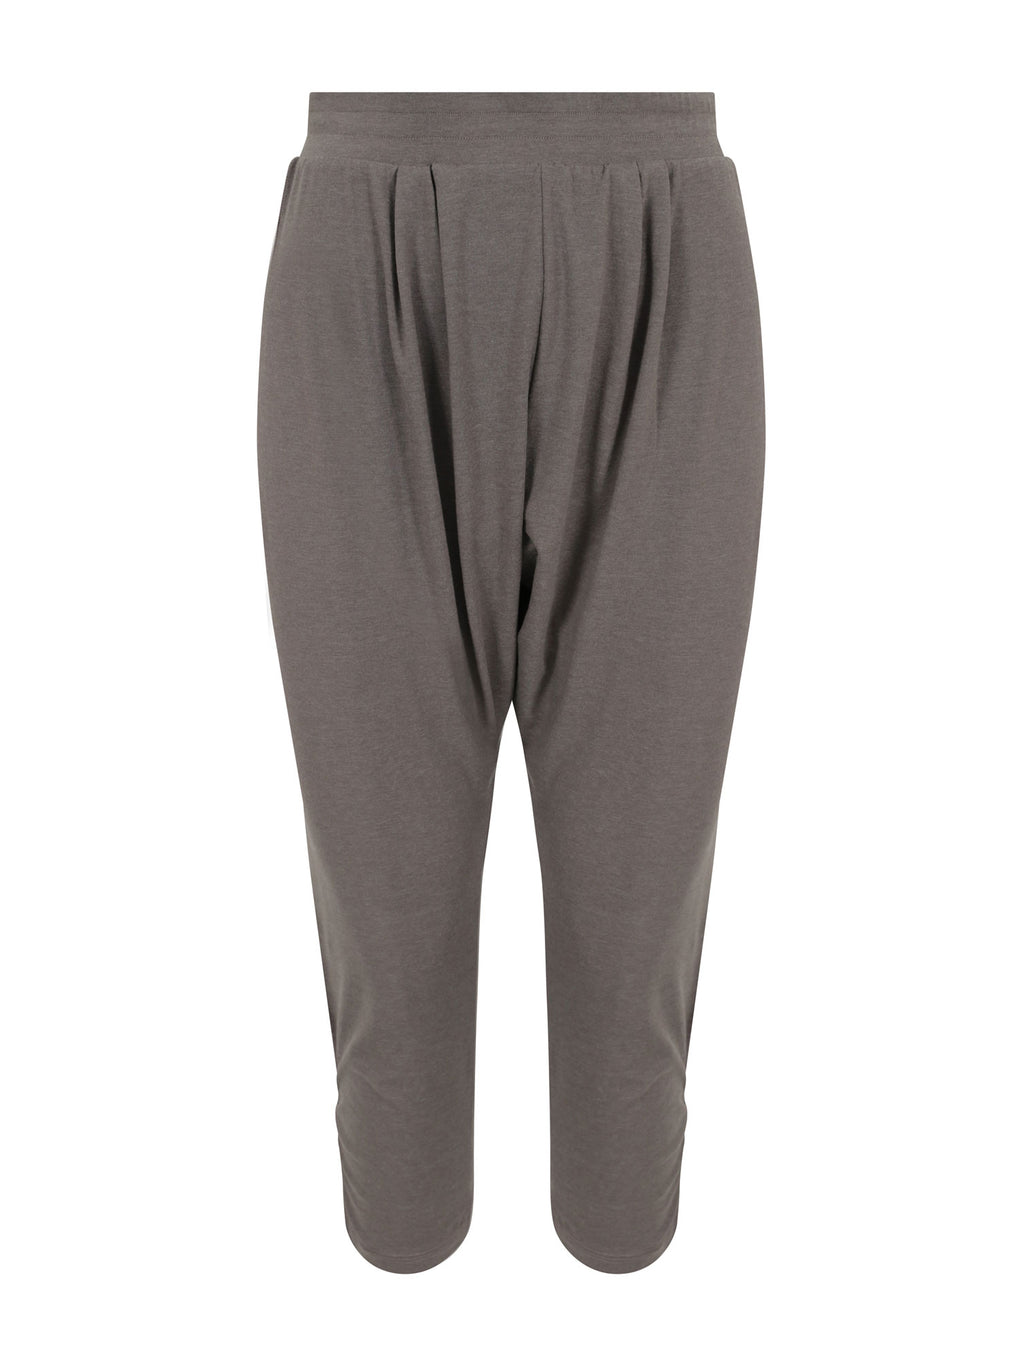 Organic Cotton Harem Pants - Perfect for Yoga & Lounging! – chaYkra